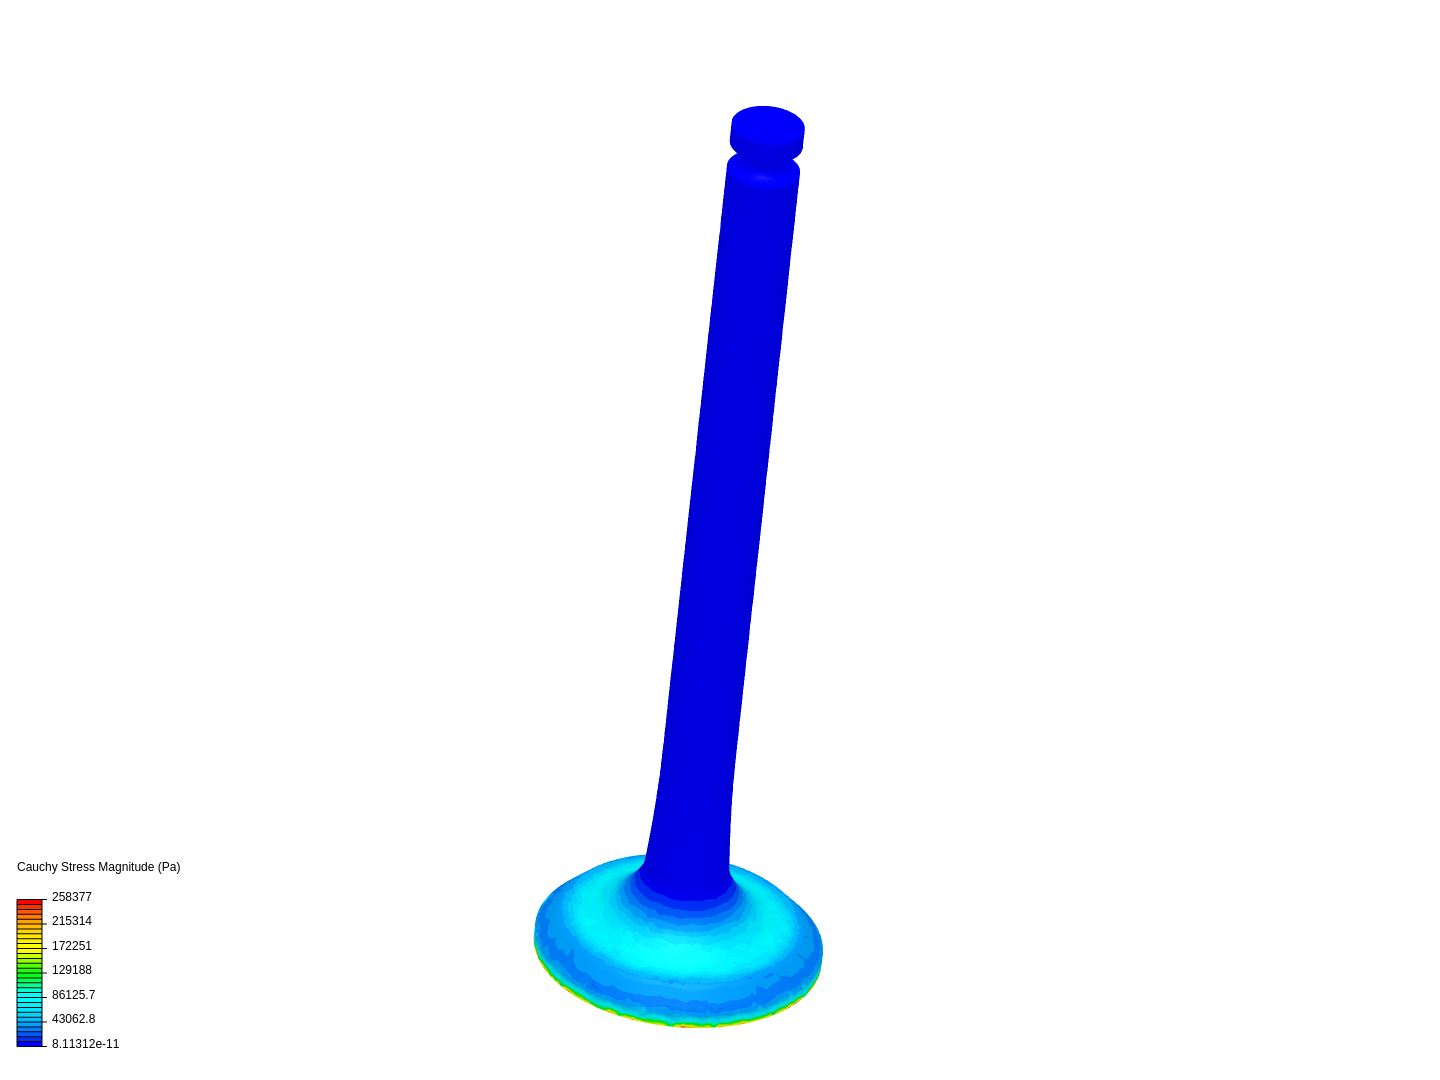 valve image